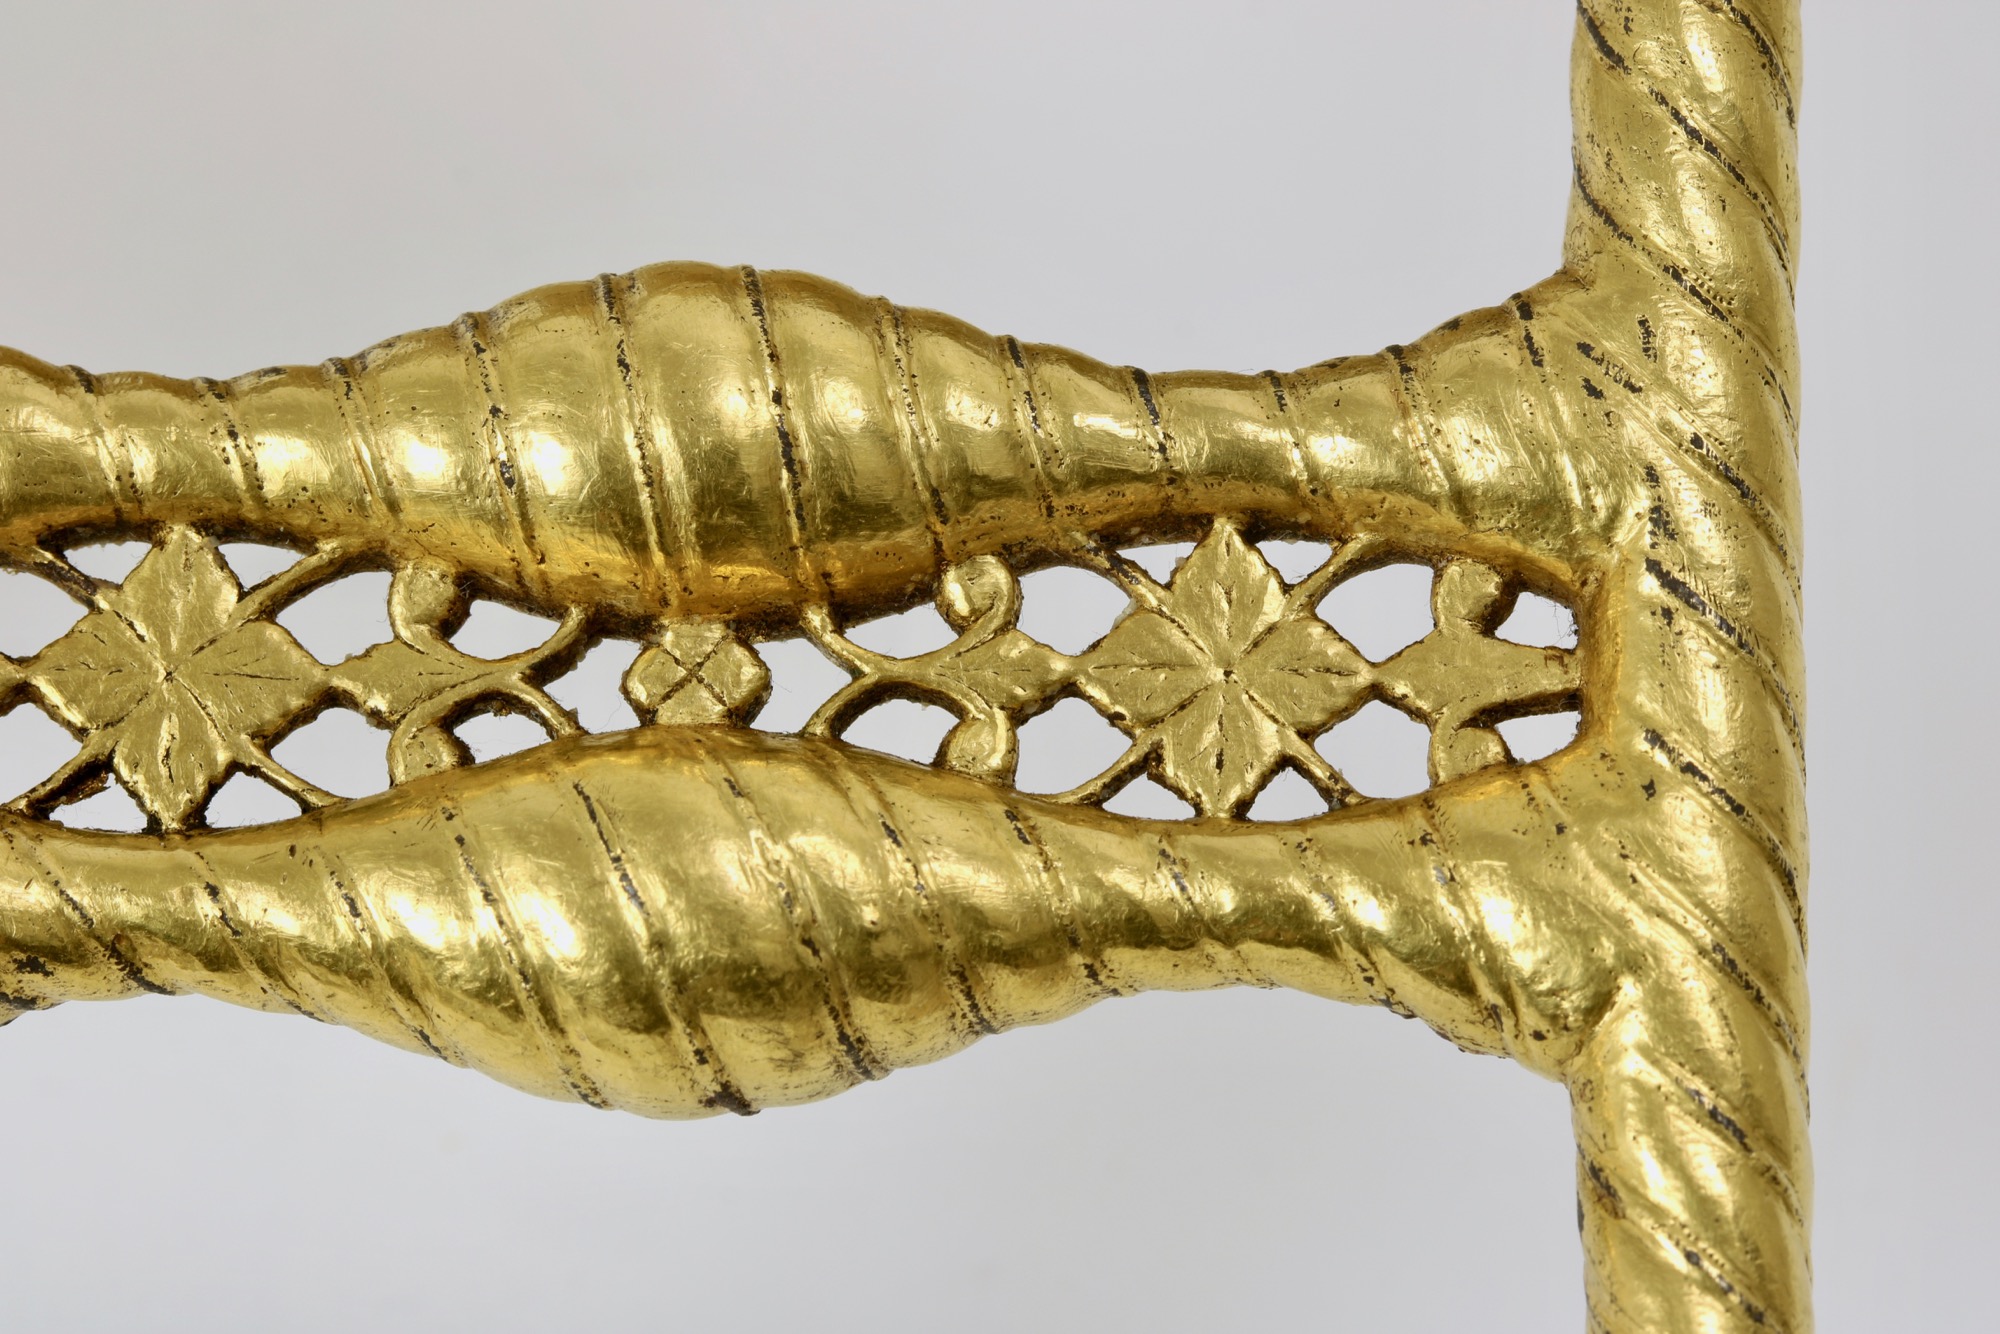 A golden Indian katar with spiral hilt, Bundi style